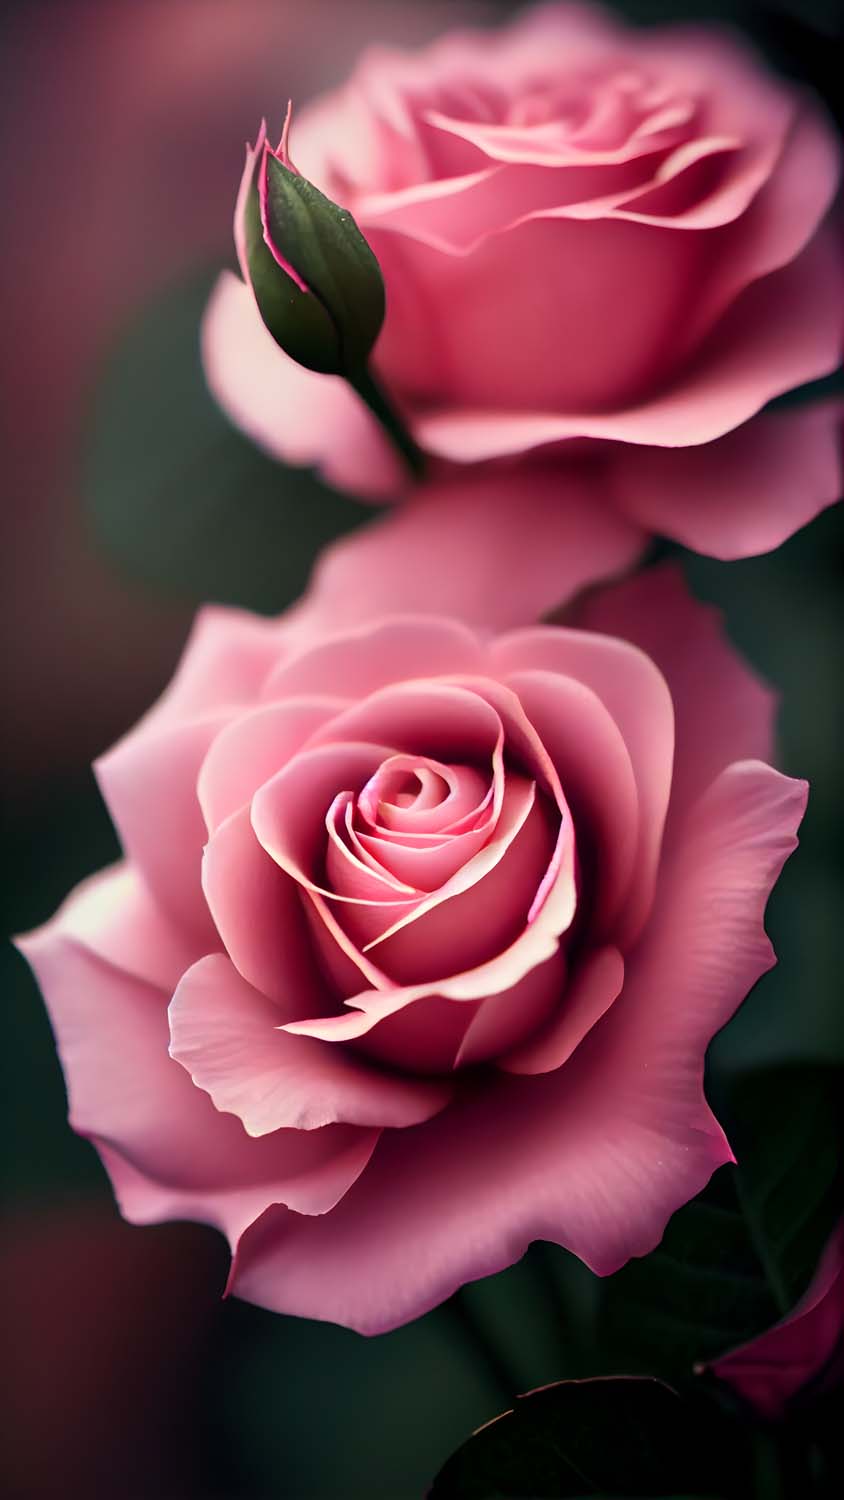 Pink Roses iPhone Wallpaper HD